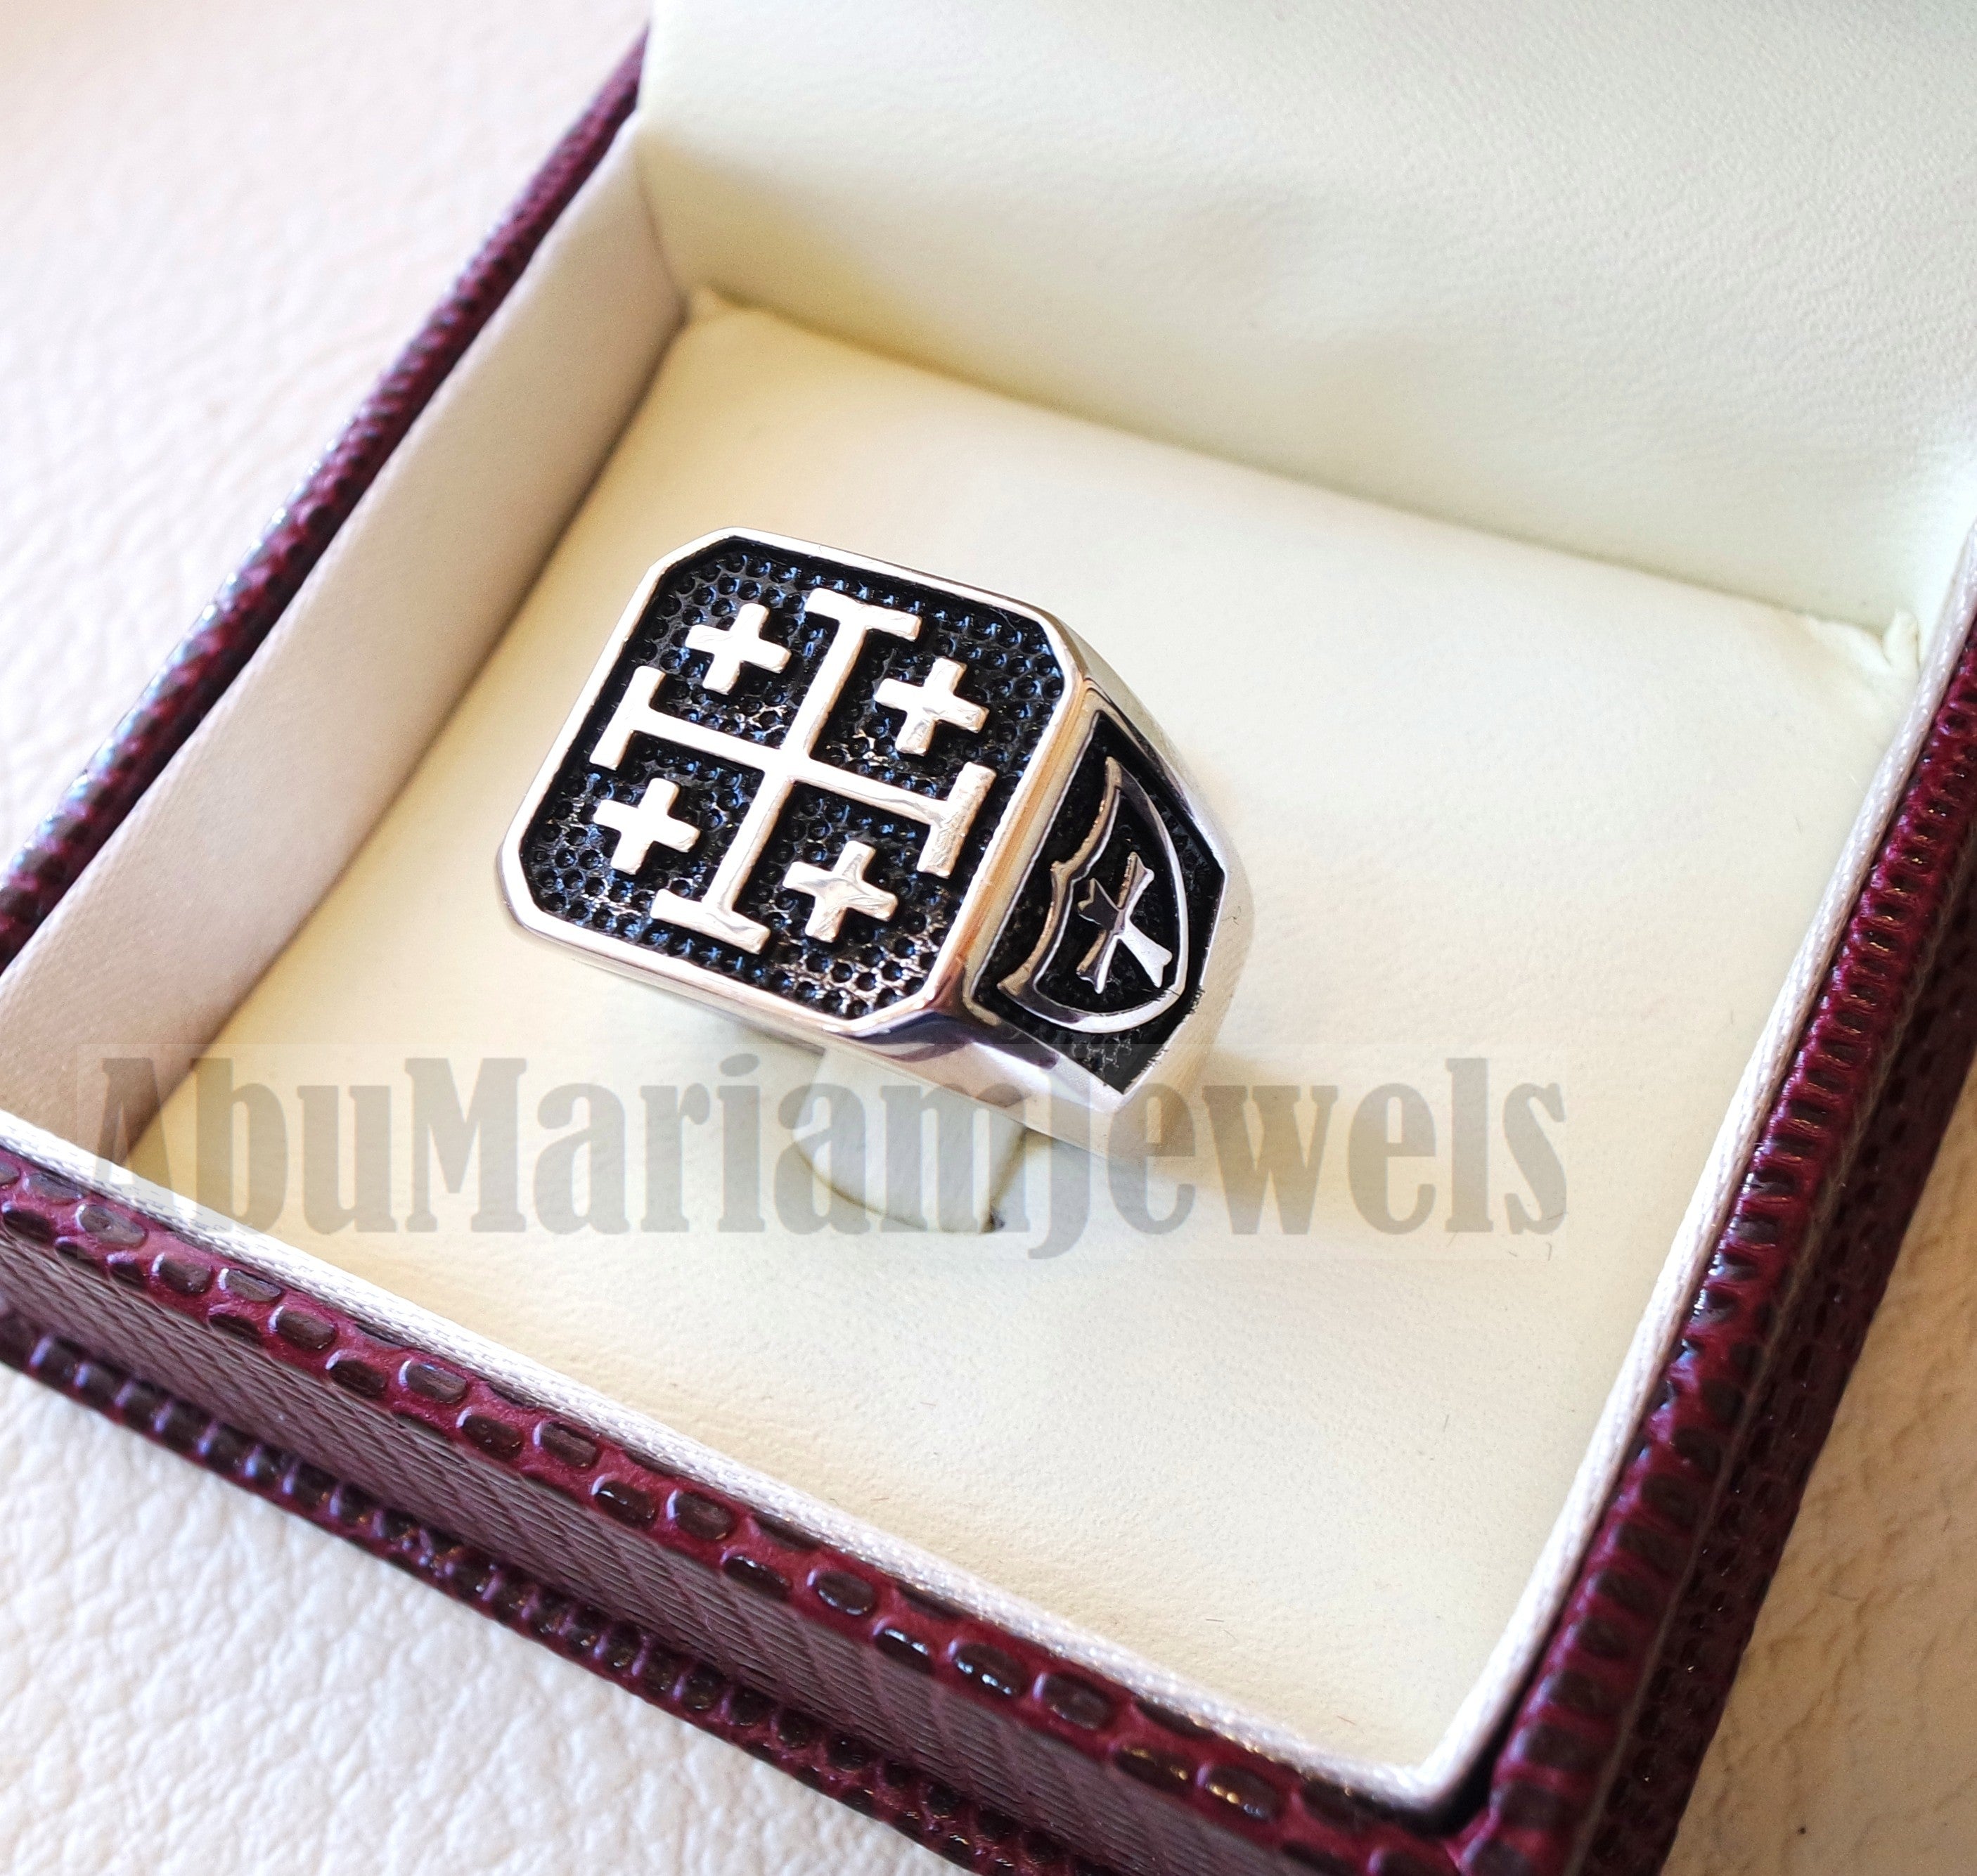 Jerusalem Cross ring christ christian symbol sterling silver 925 man gift jewelry fast shipping square shape all sizes Catholic Orthodox